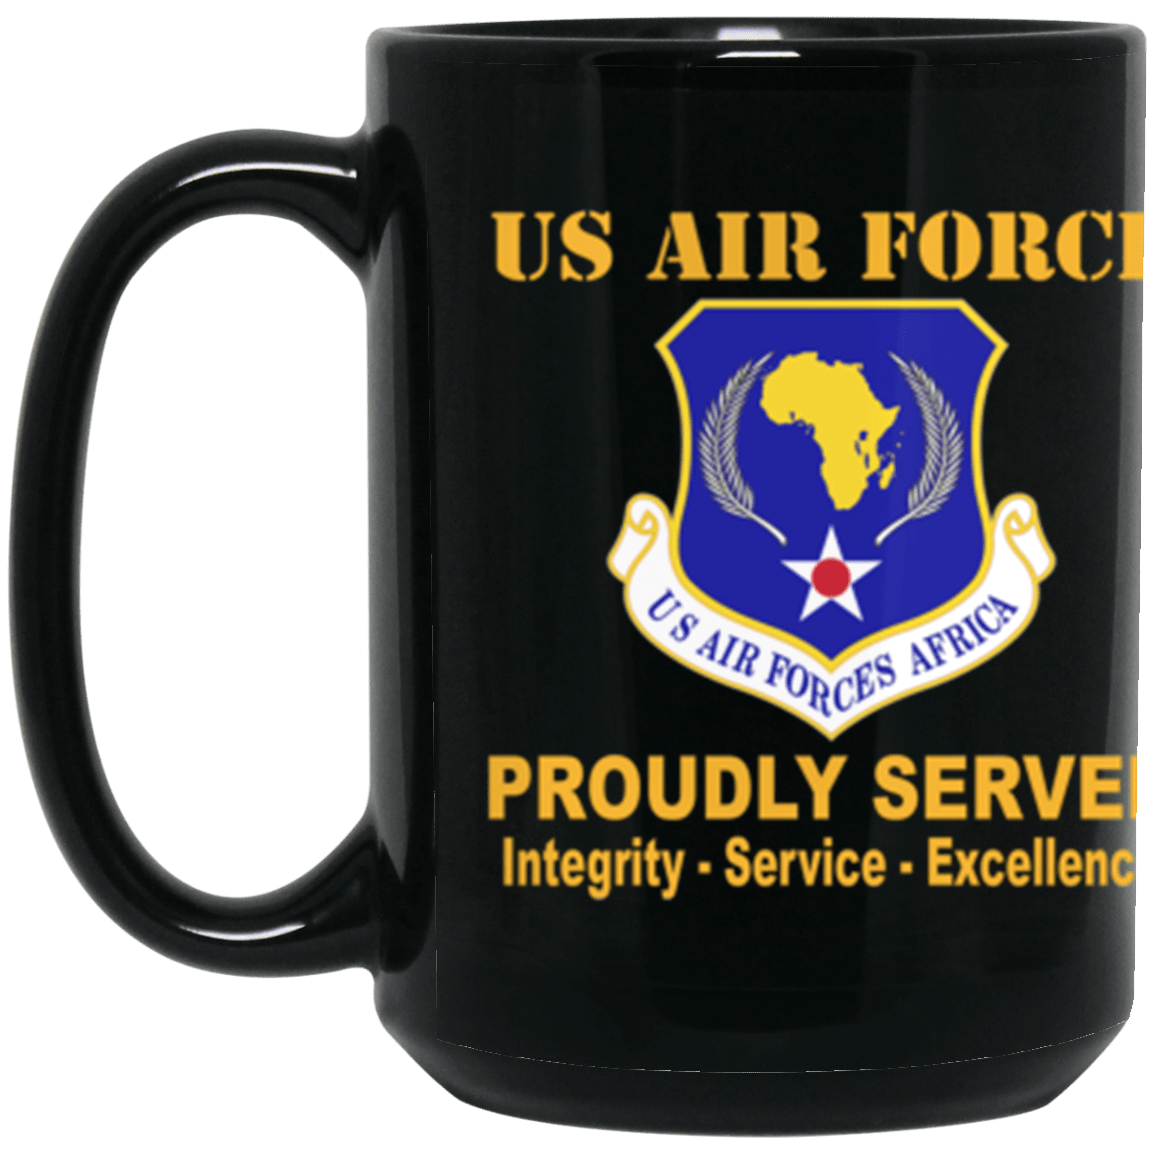 United States Air Forces Africa Proudly Served Core Values 15 oz. Black Mug-Mug-USAF-Veterans Nation